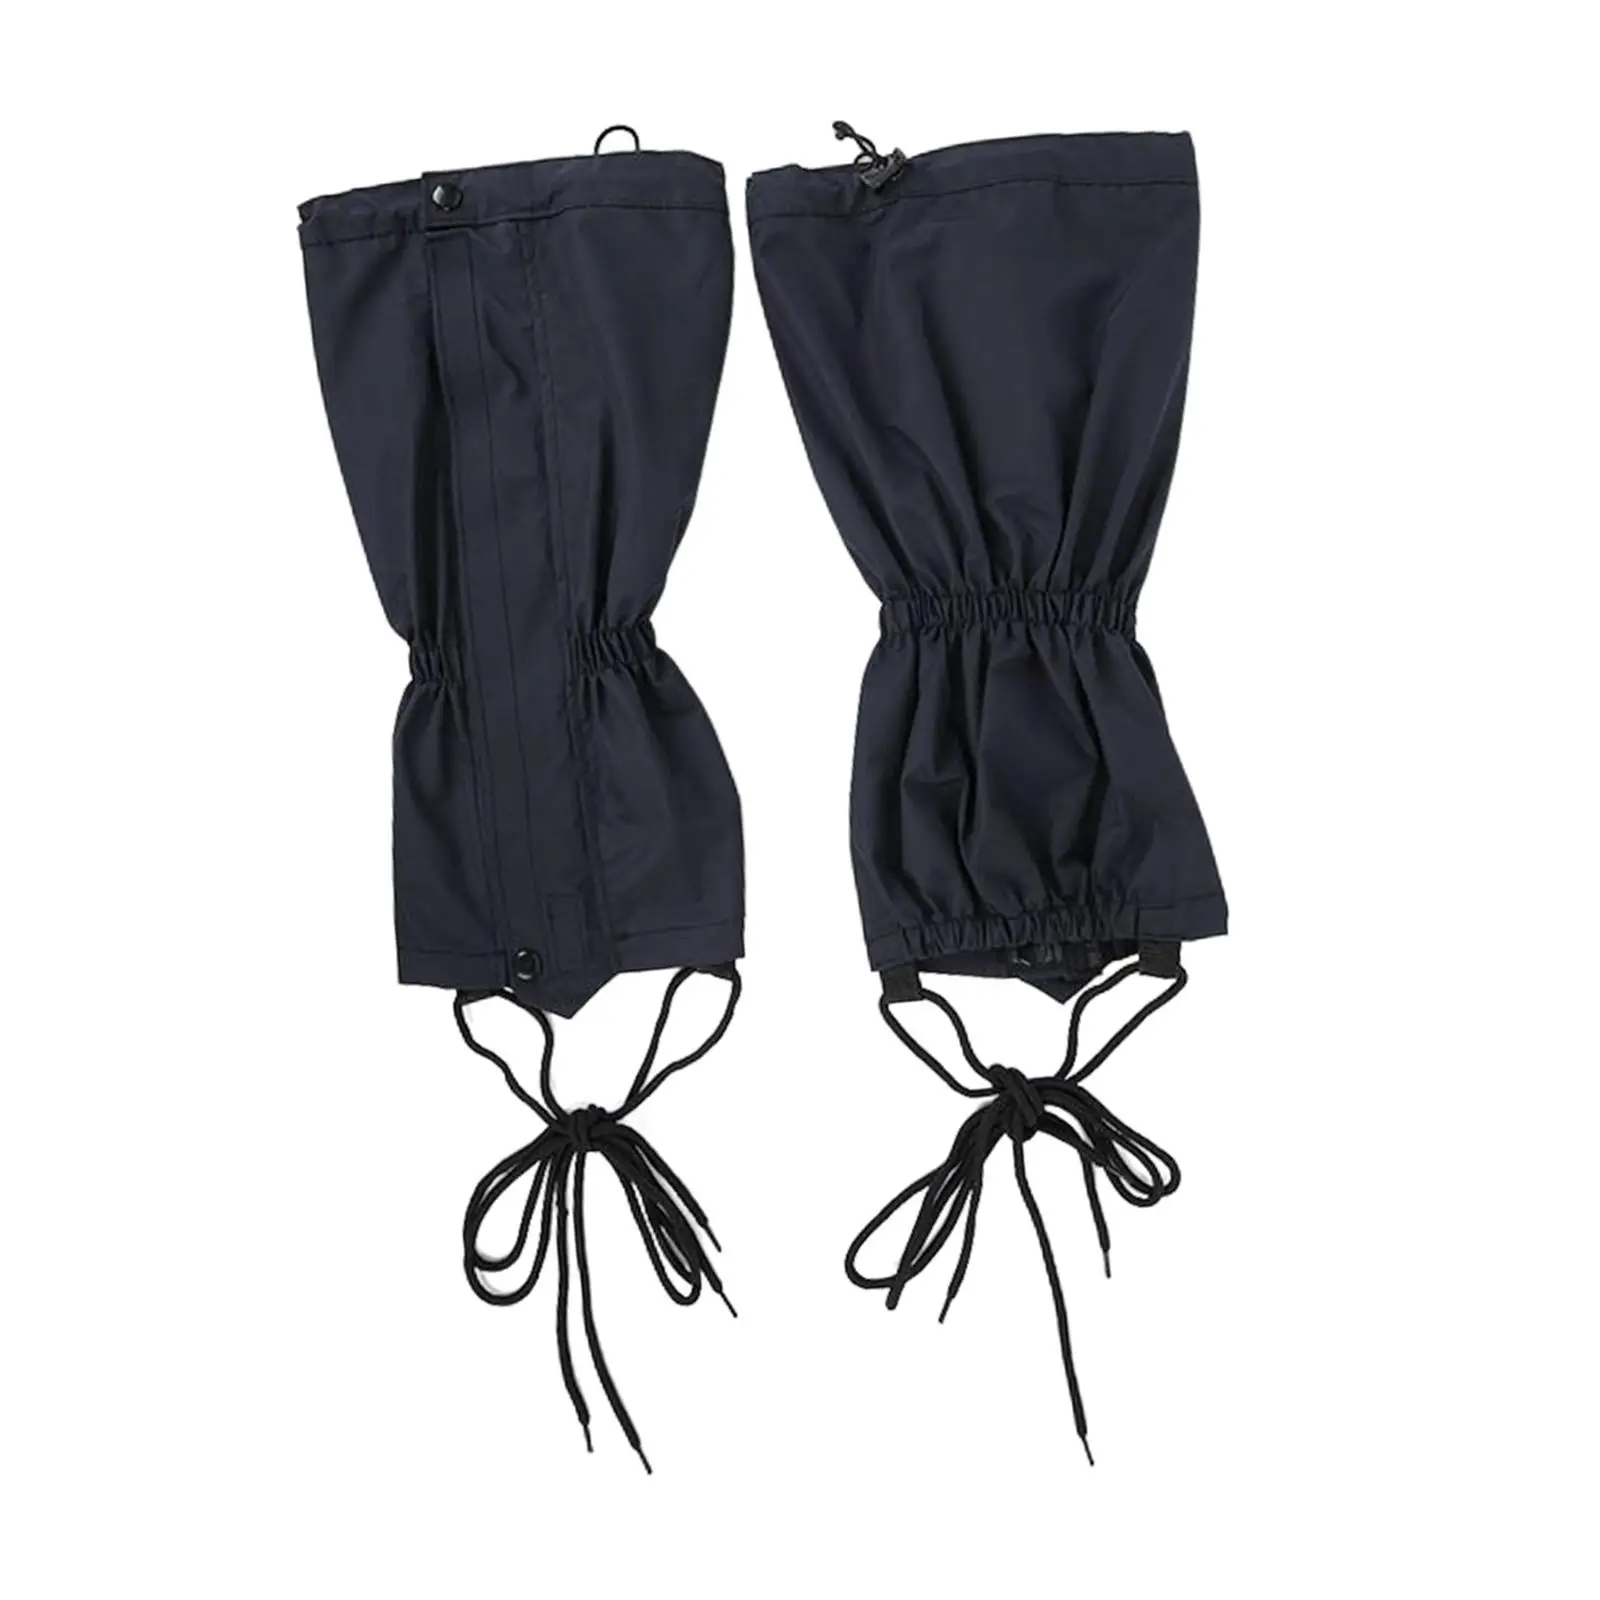 Rainproof Leg legging Adjustable Anti tears snow Boot Lightweight Cover for